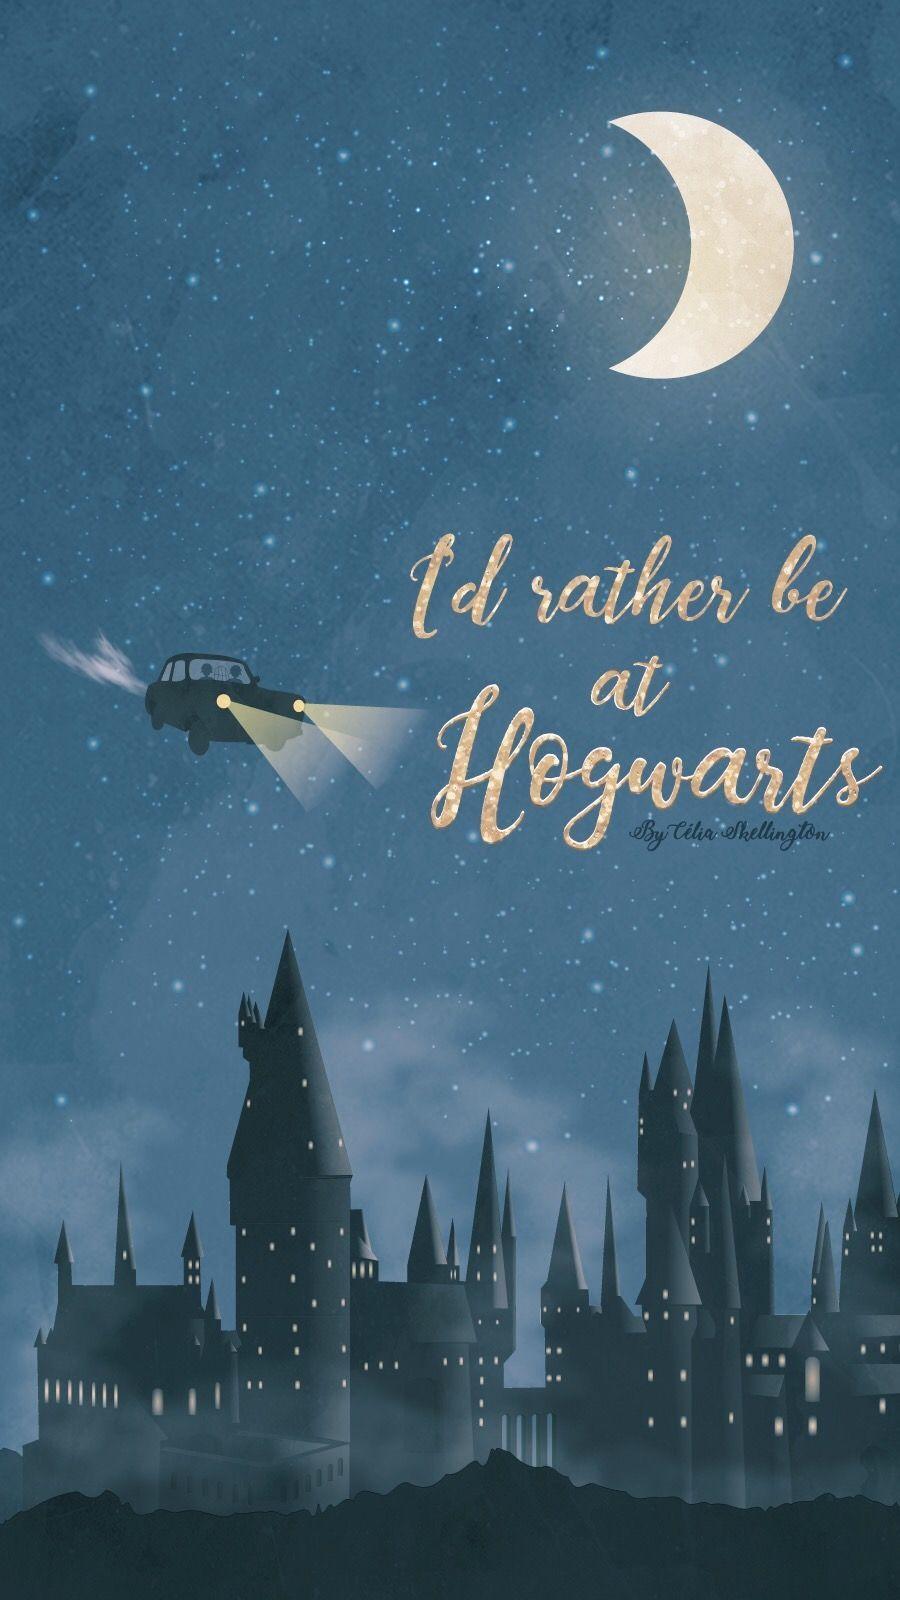 Harry Potter Wallpaper / Hogwarts. Harry potter. Harry